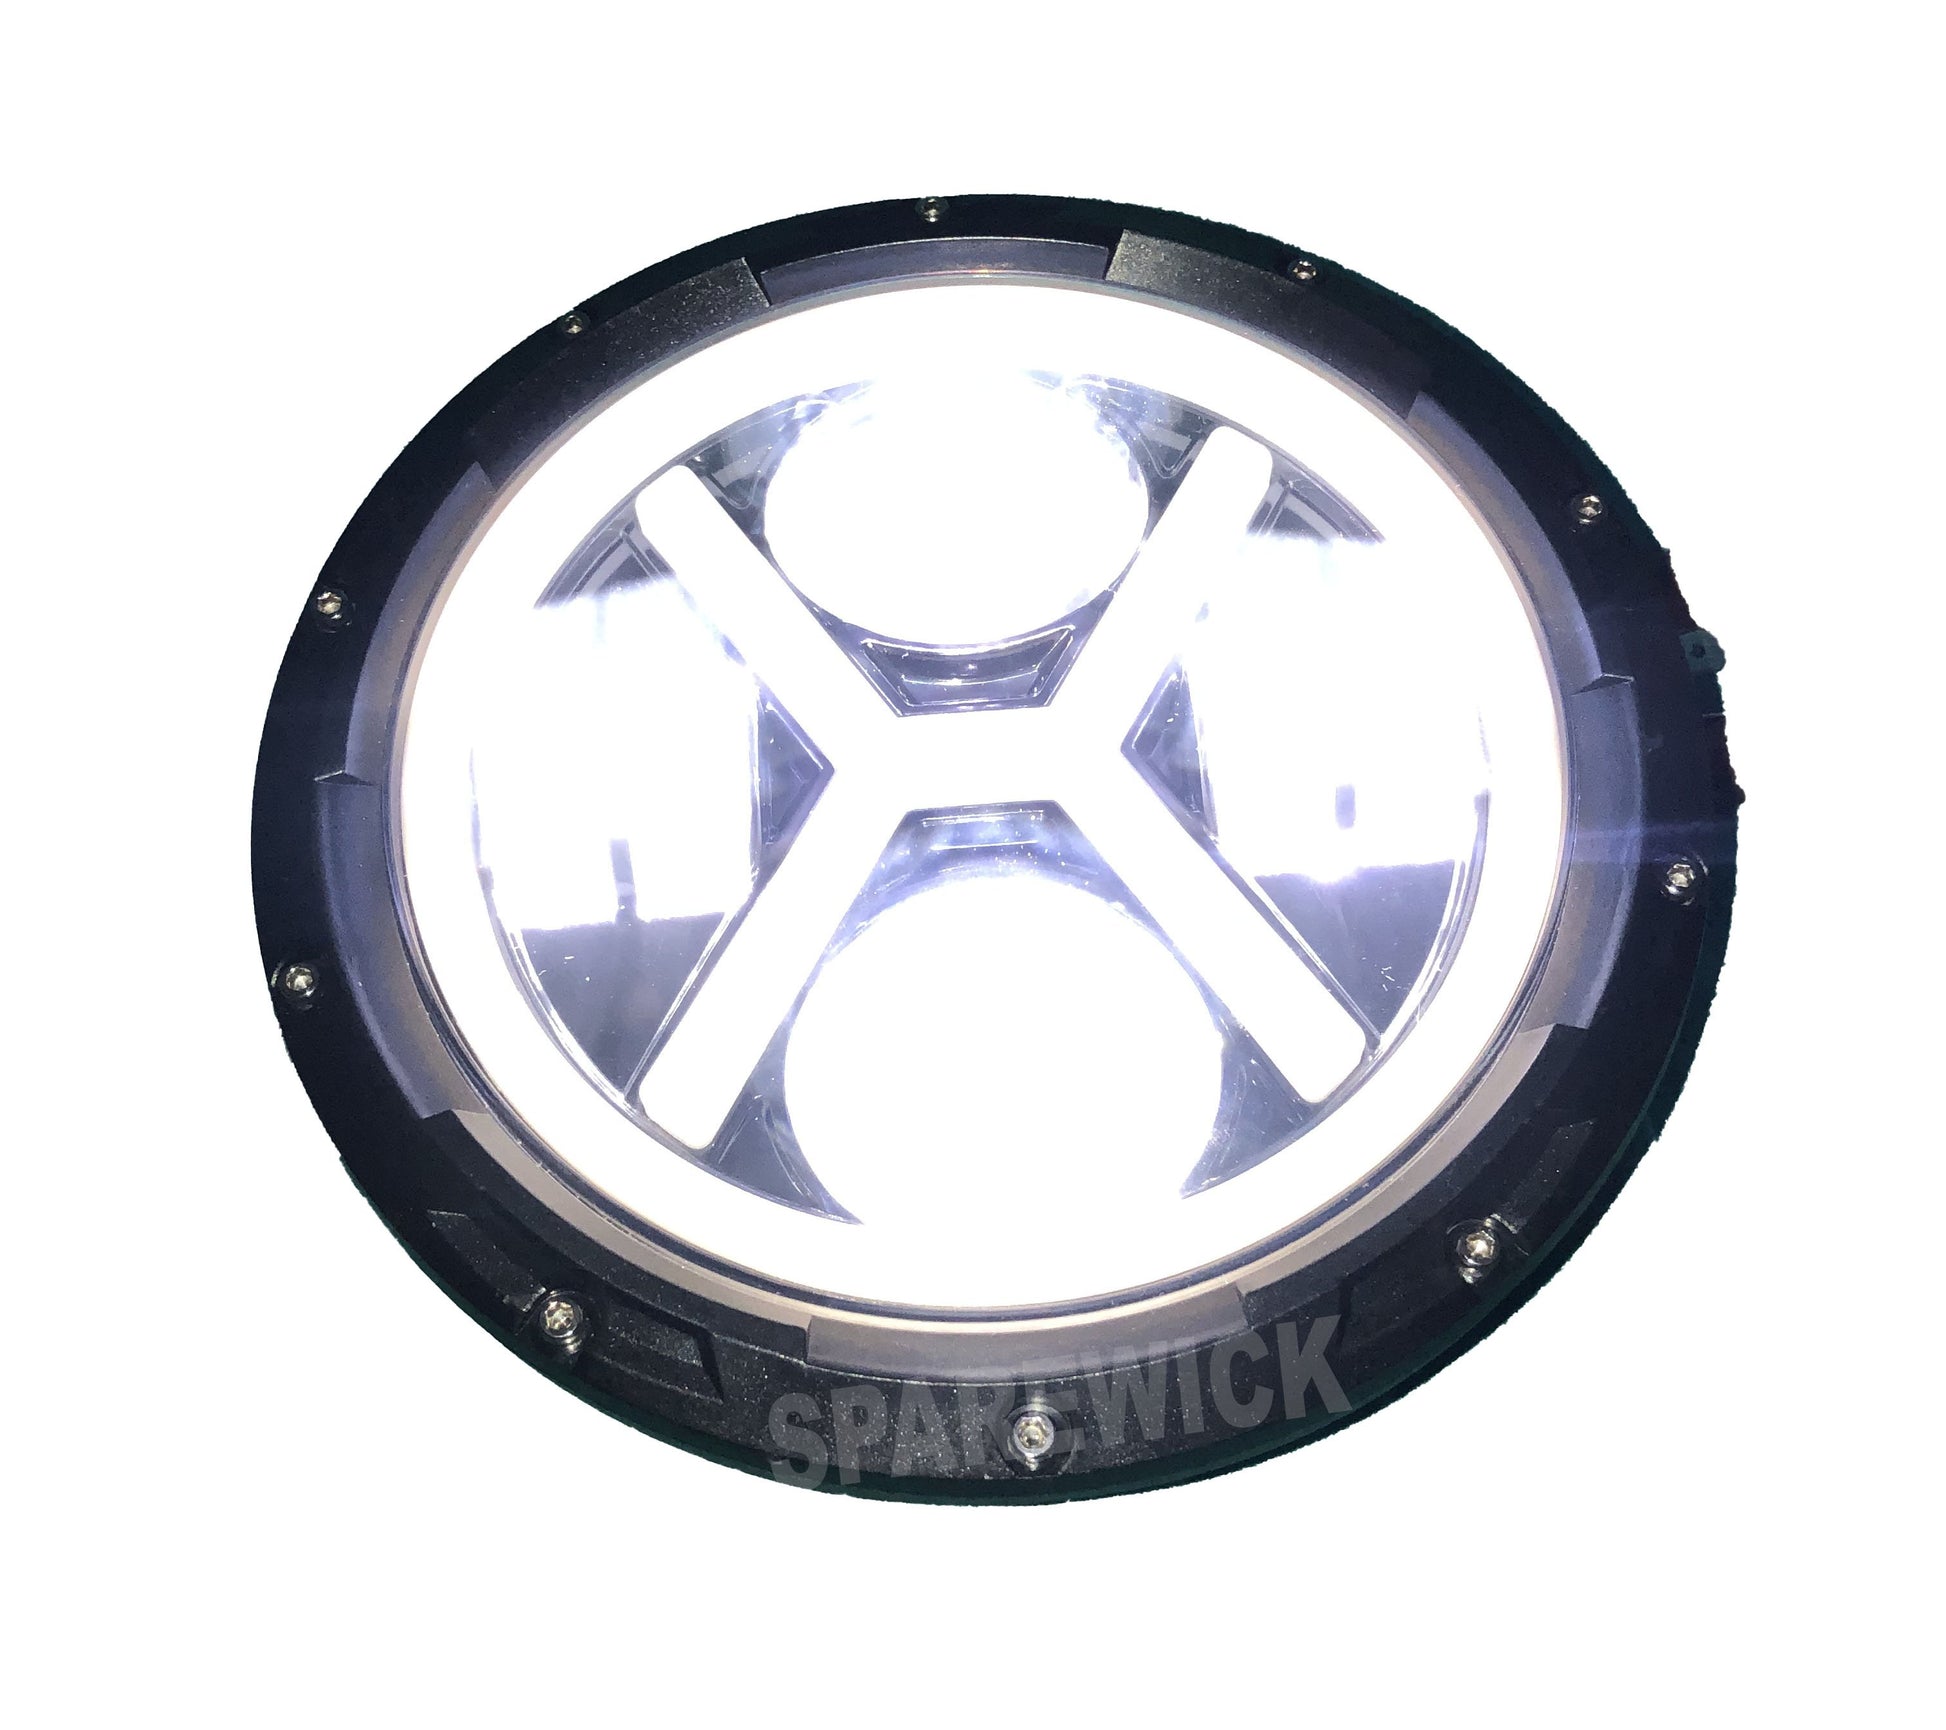 X Logo Headlight- 7 Inch (6 Months Warranty) - Premium Headlights from Sparewick - Just Rs. 2900! Shop now at Sparewick